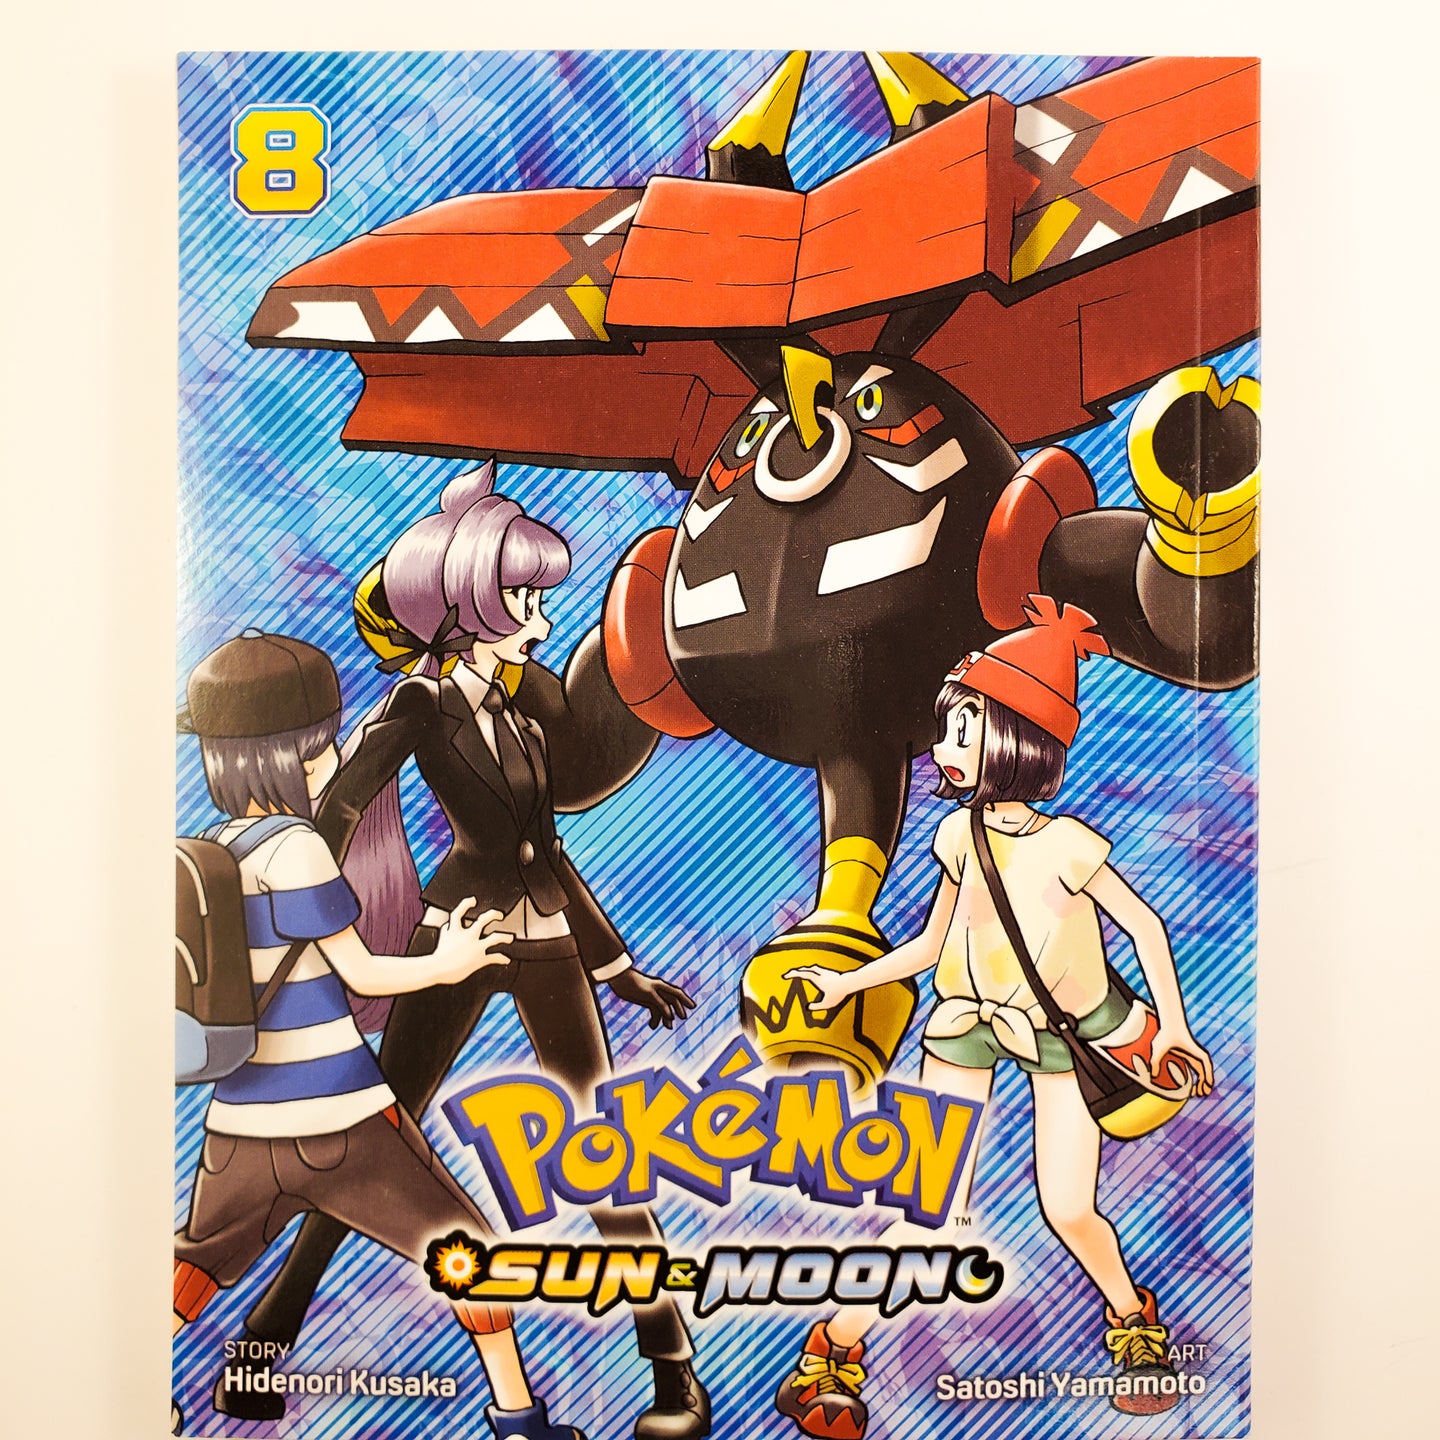 Pokemon Sun & Moon Manga Volume 8. Story by Hidenori Kusaka. Art by Satoshi Yamamoto. 